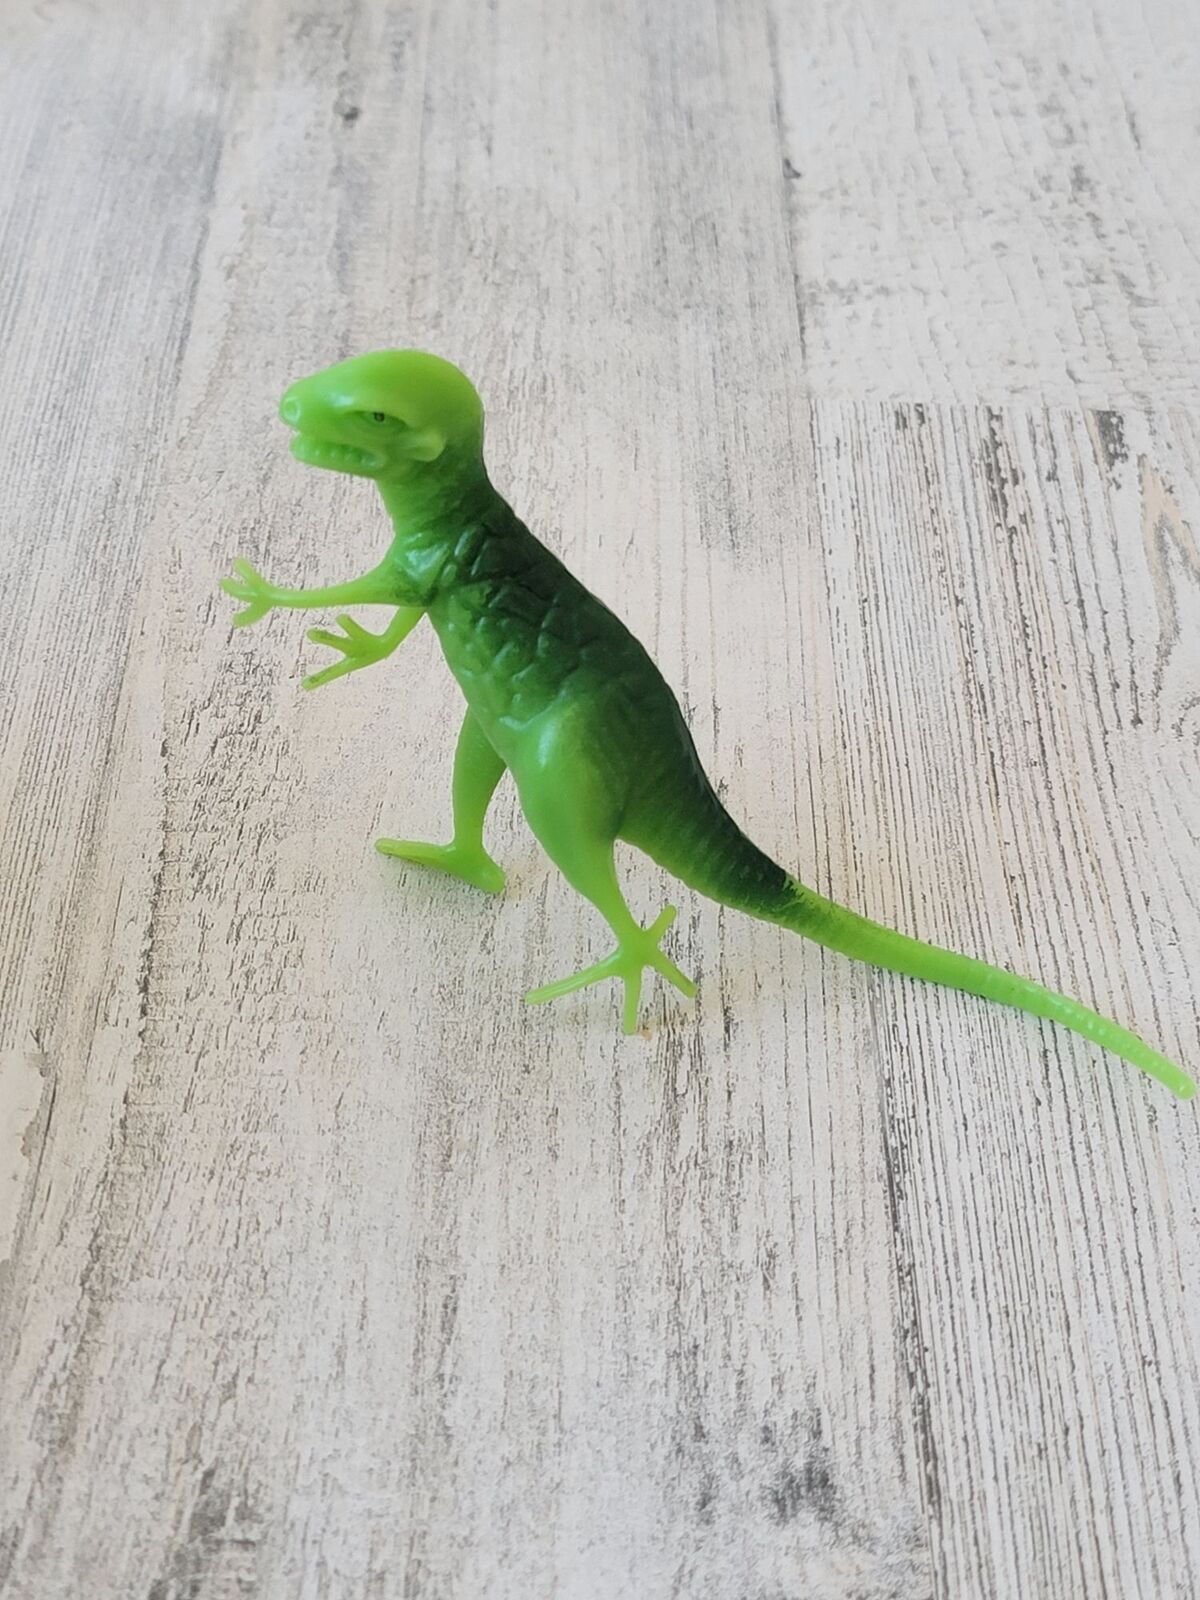 Green lizard reptile dinosaur toy figure bug scary